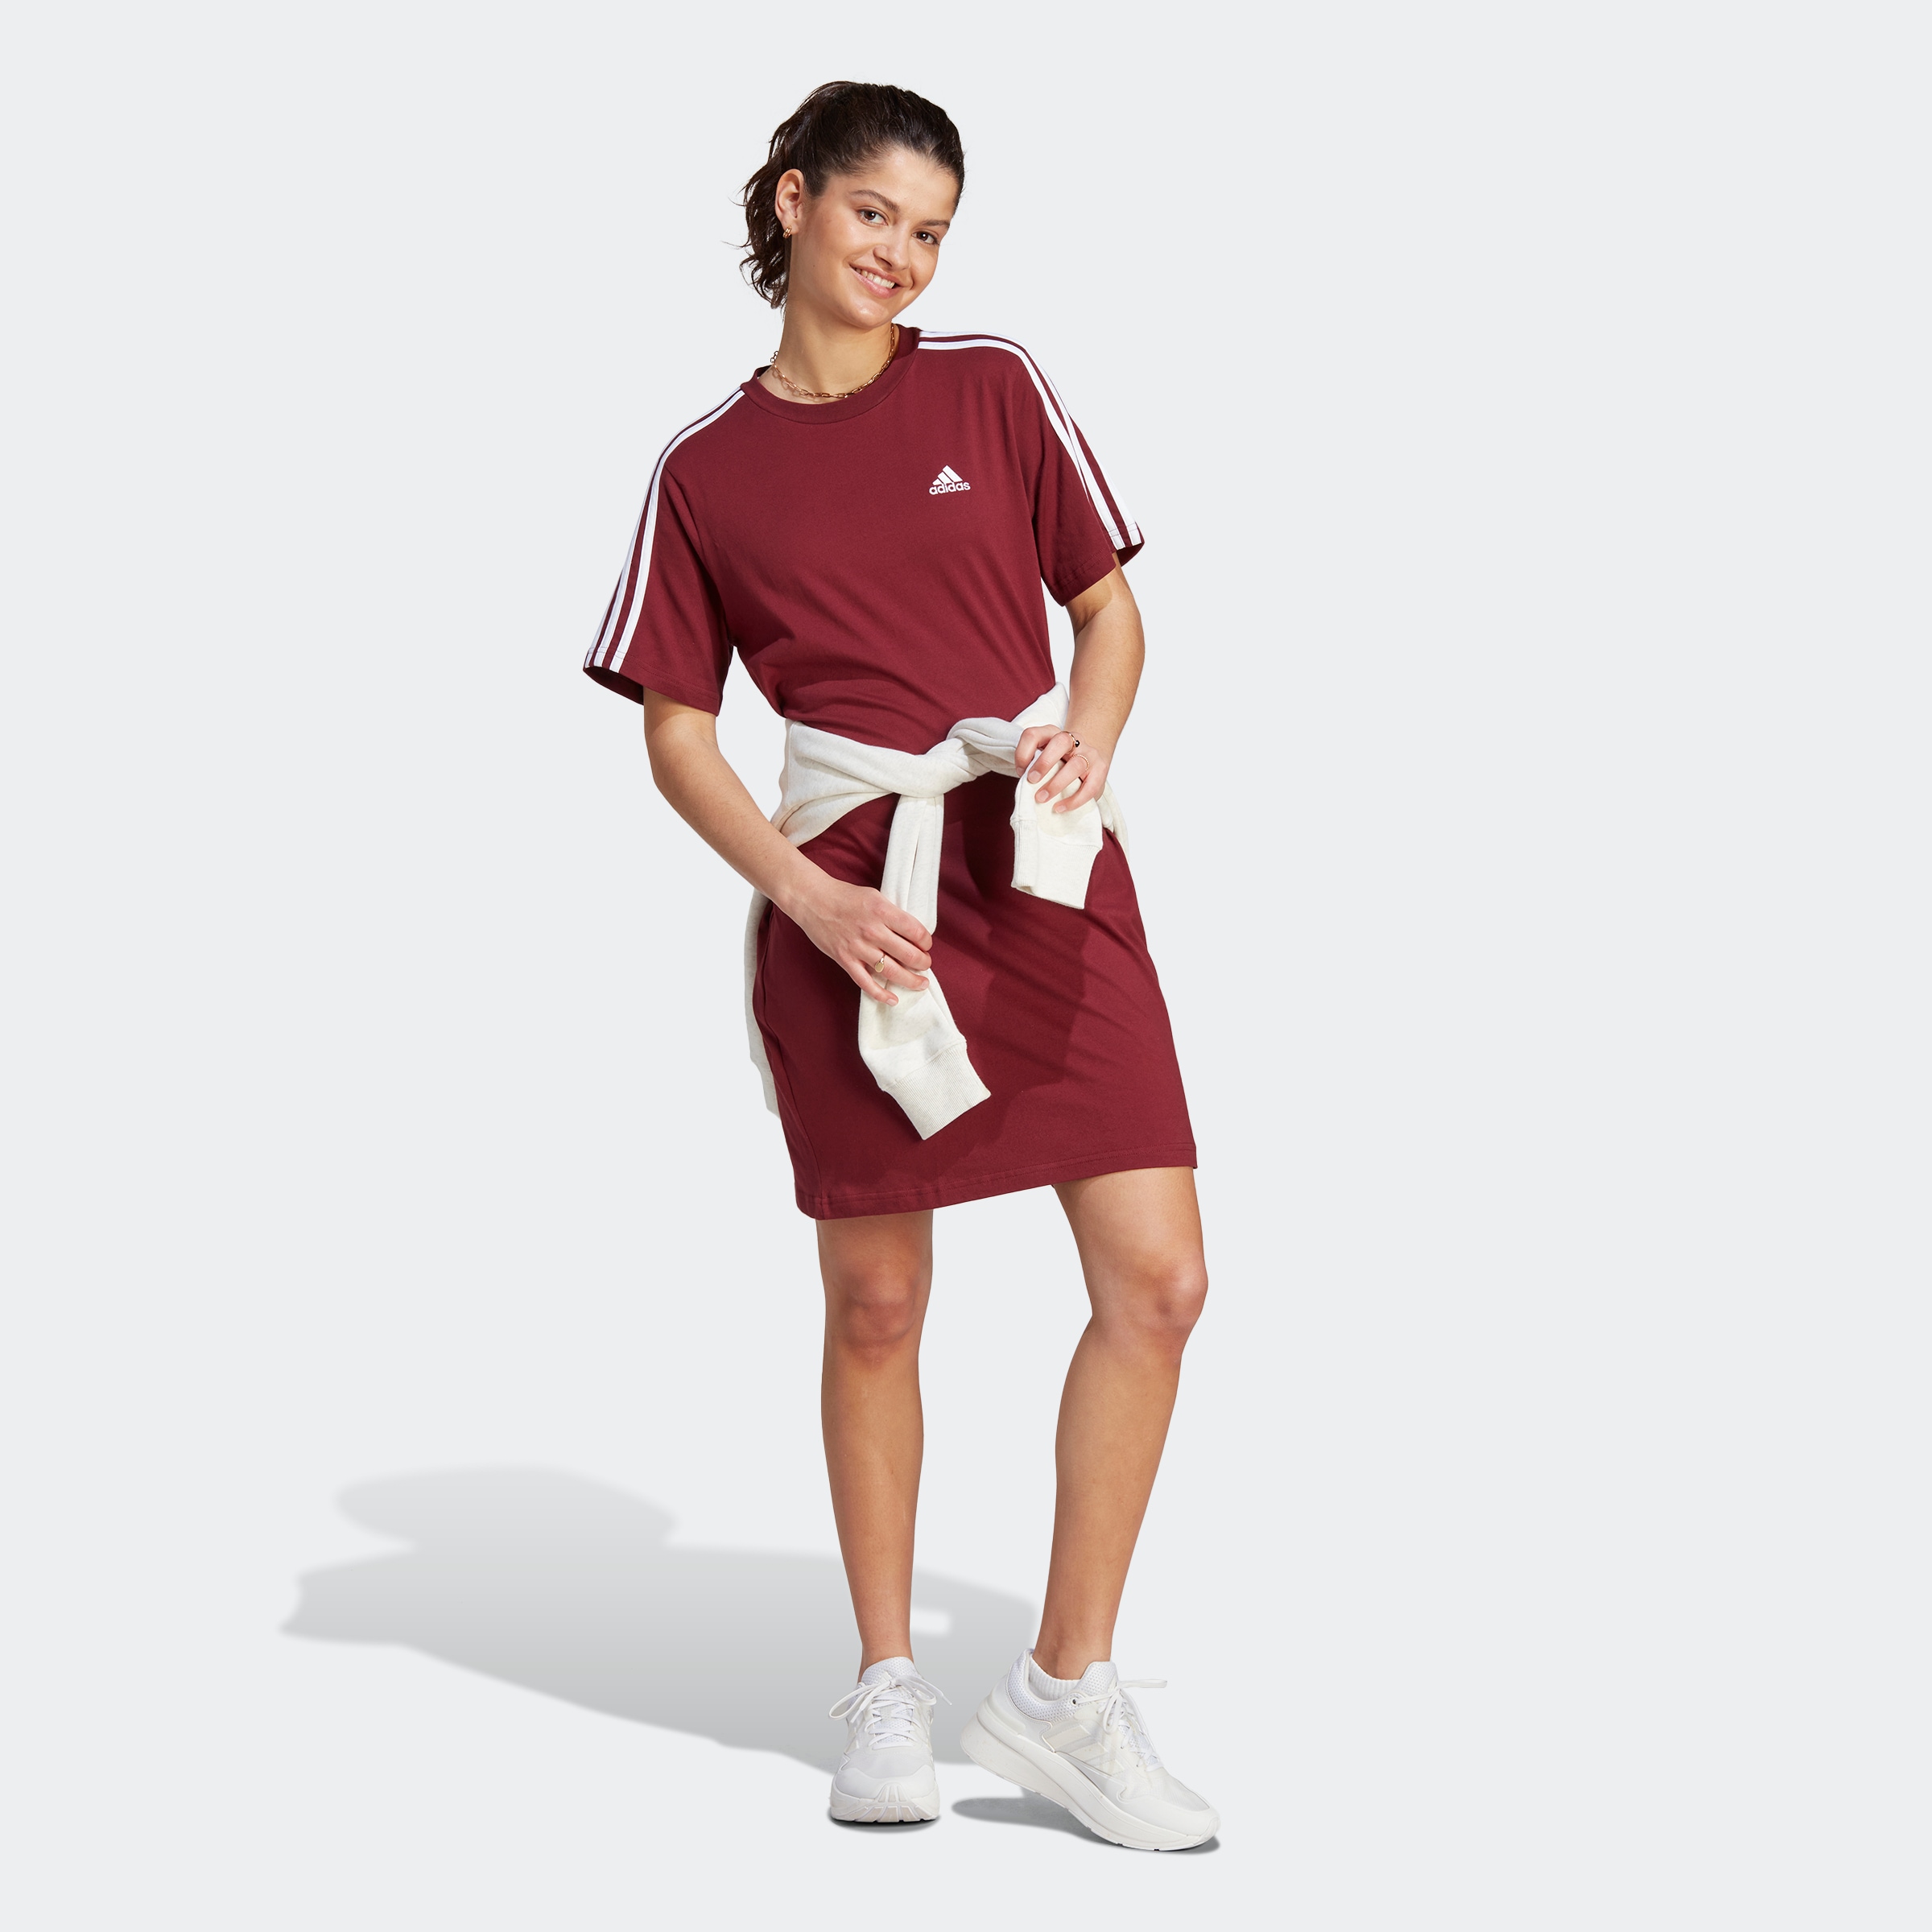 3S kaufen »W adidas Sportswear Shirtkleid | BAUR DR« für T BF